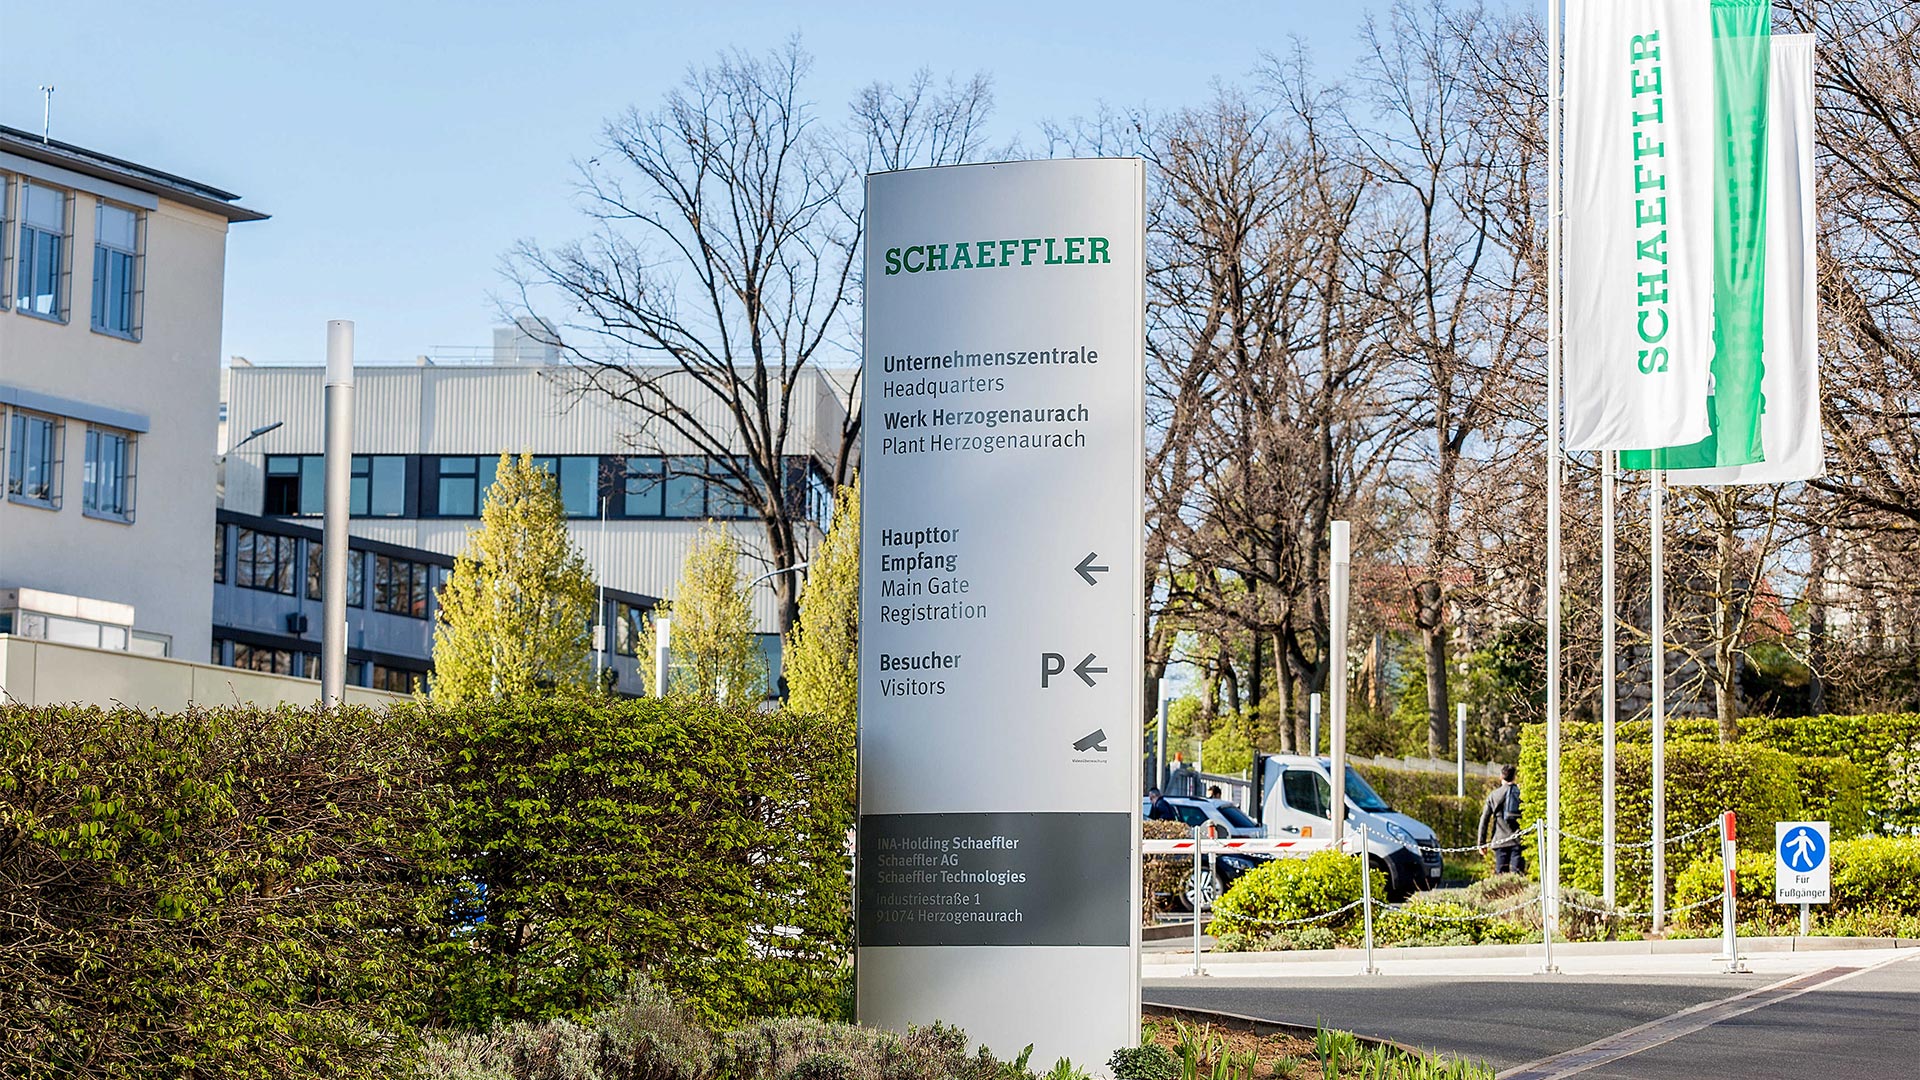 Schaeffler Zentrale in Herzogenaurach | picture alliance / Fotostand